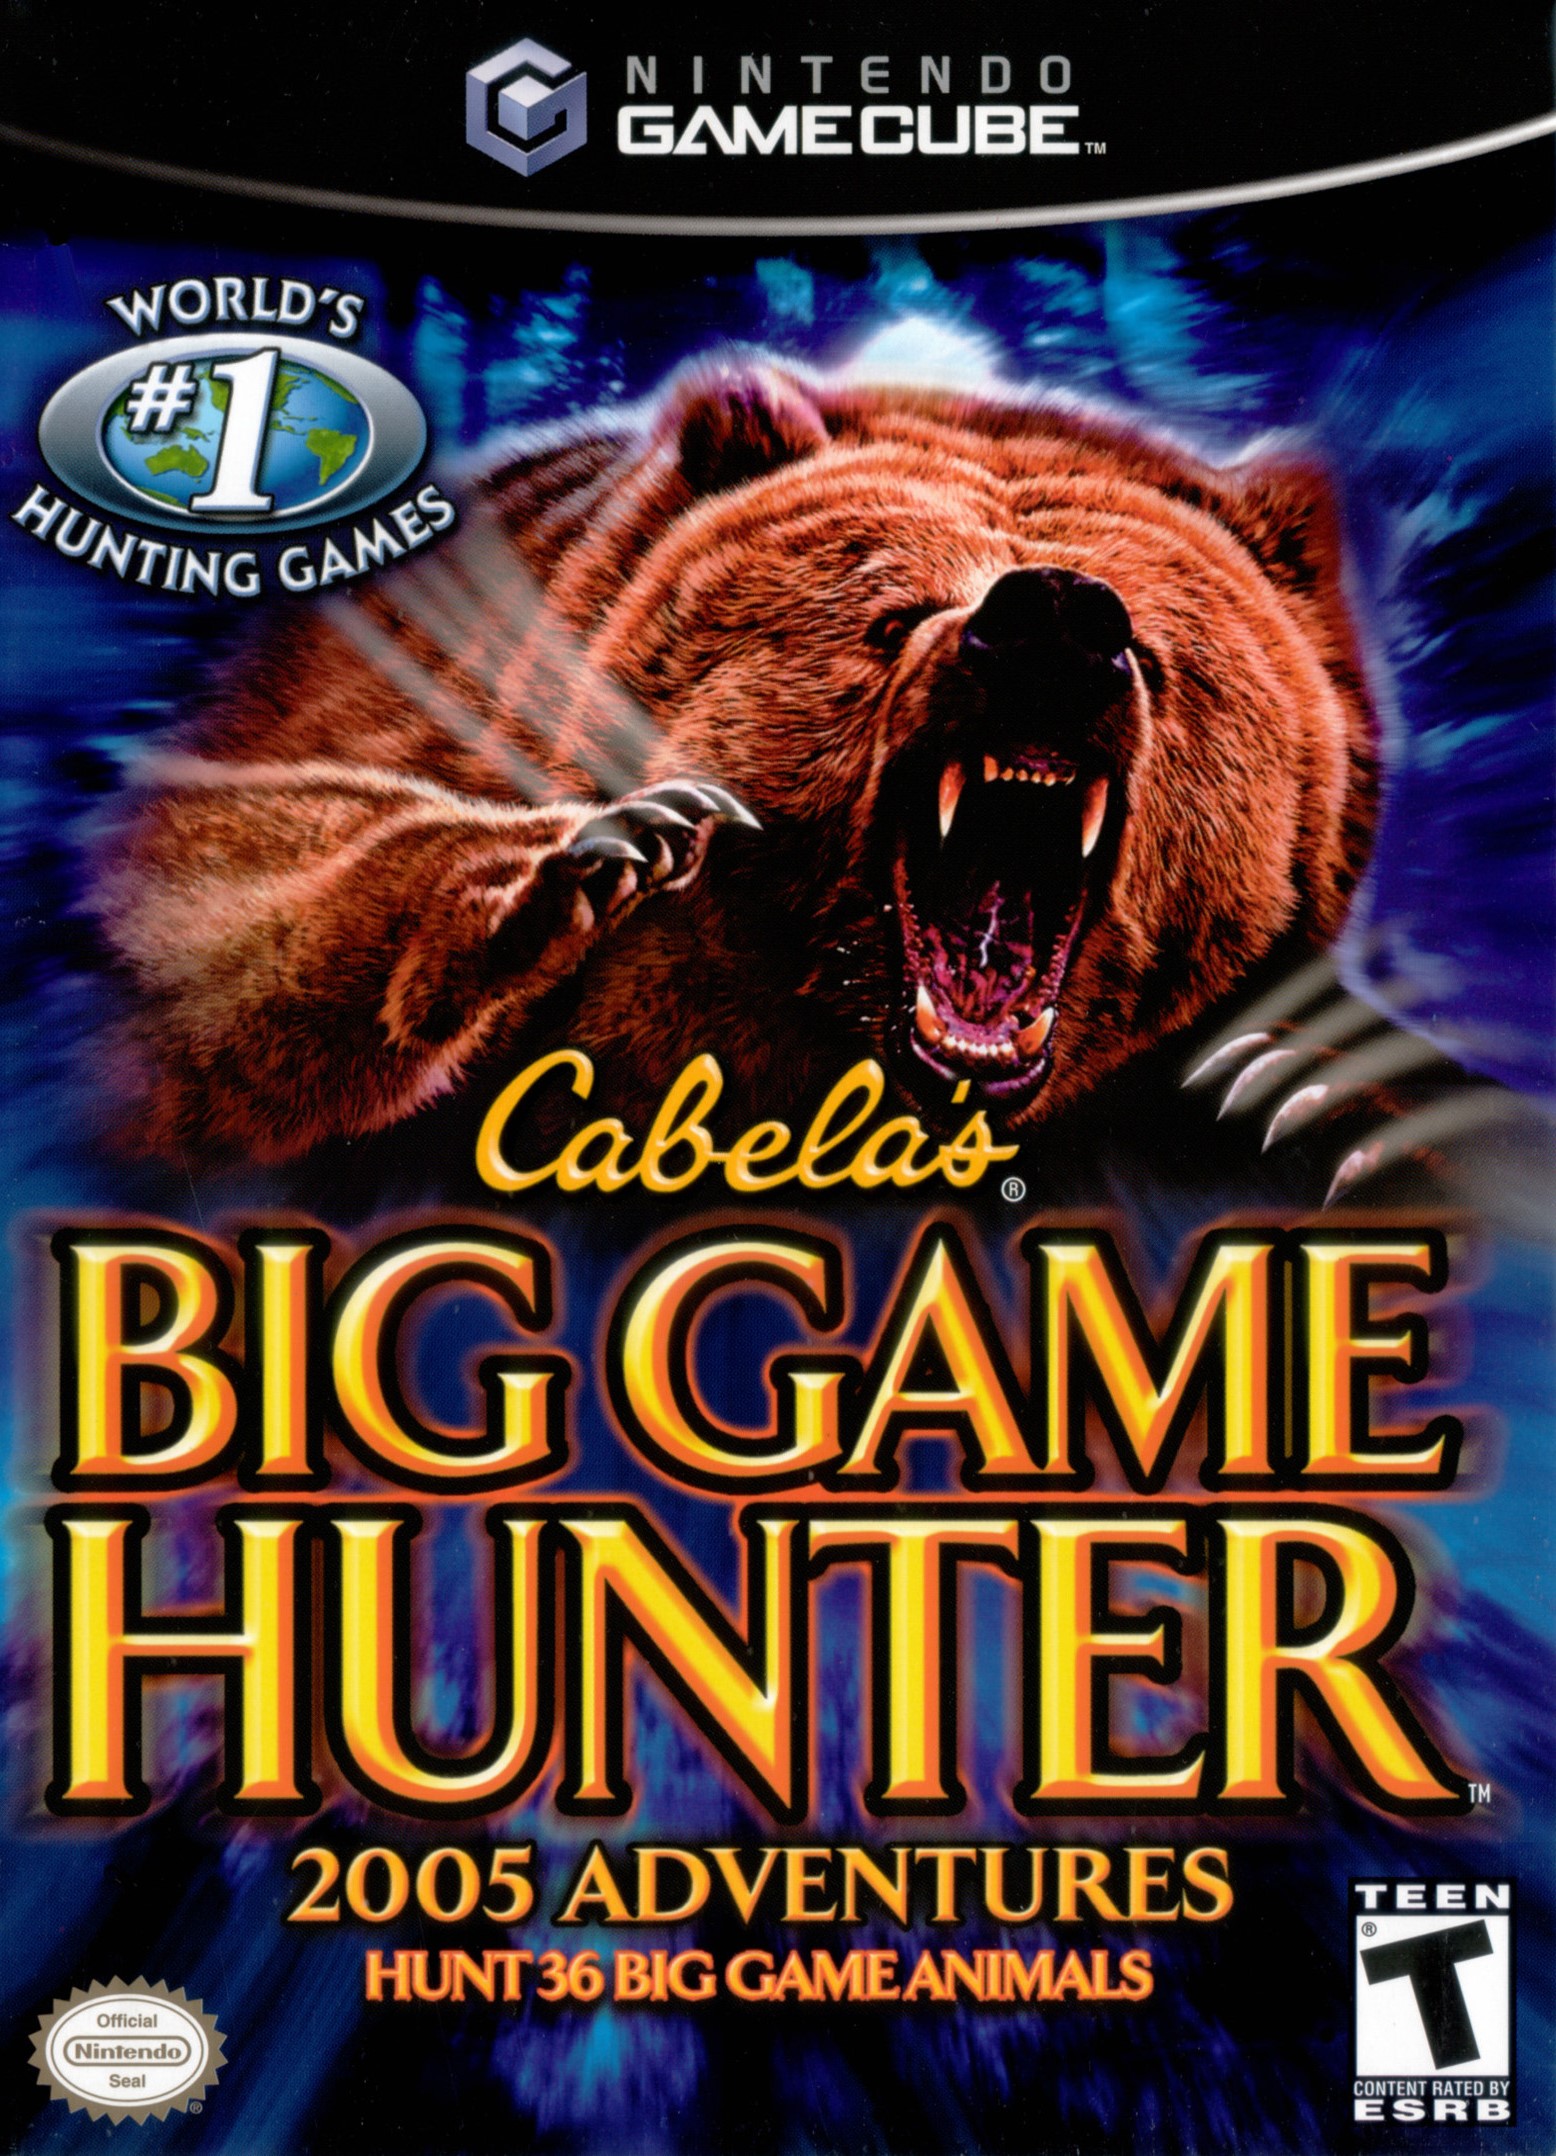 'Cabelas: Big Game Hunter 2005 Adventures'